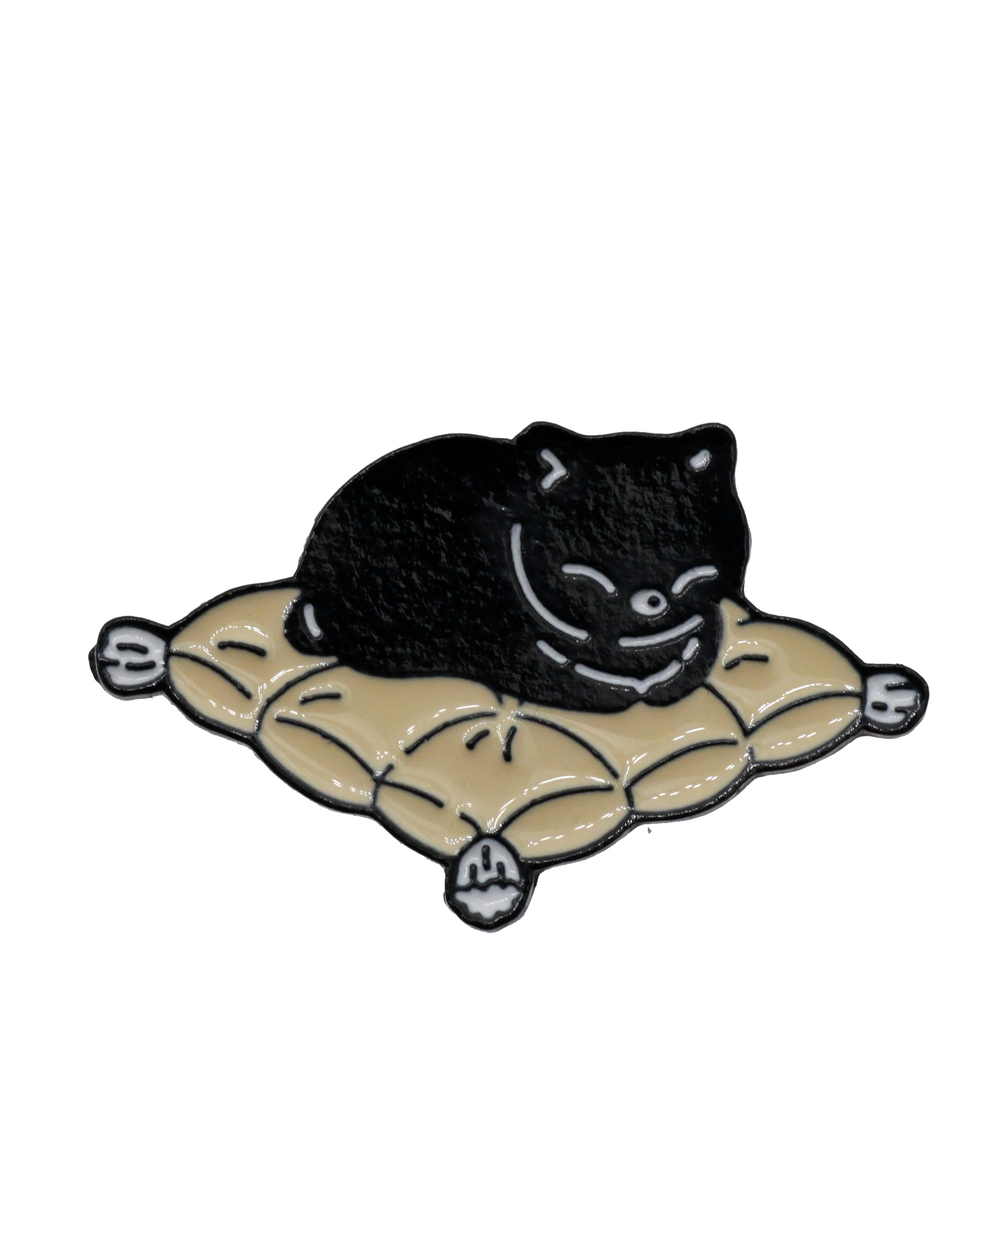 Металлический значок "Котик на подушке"